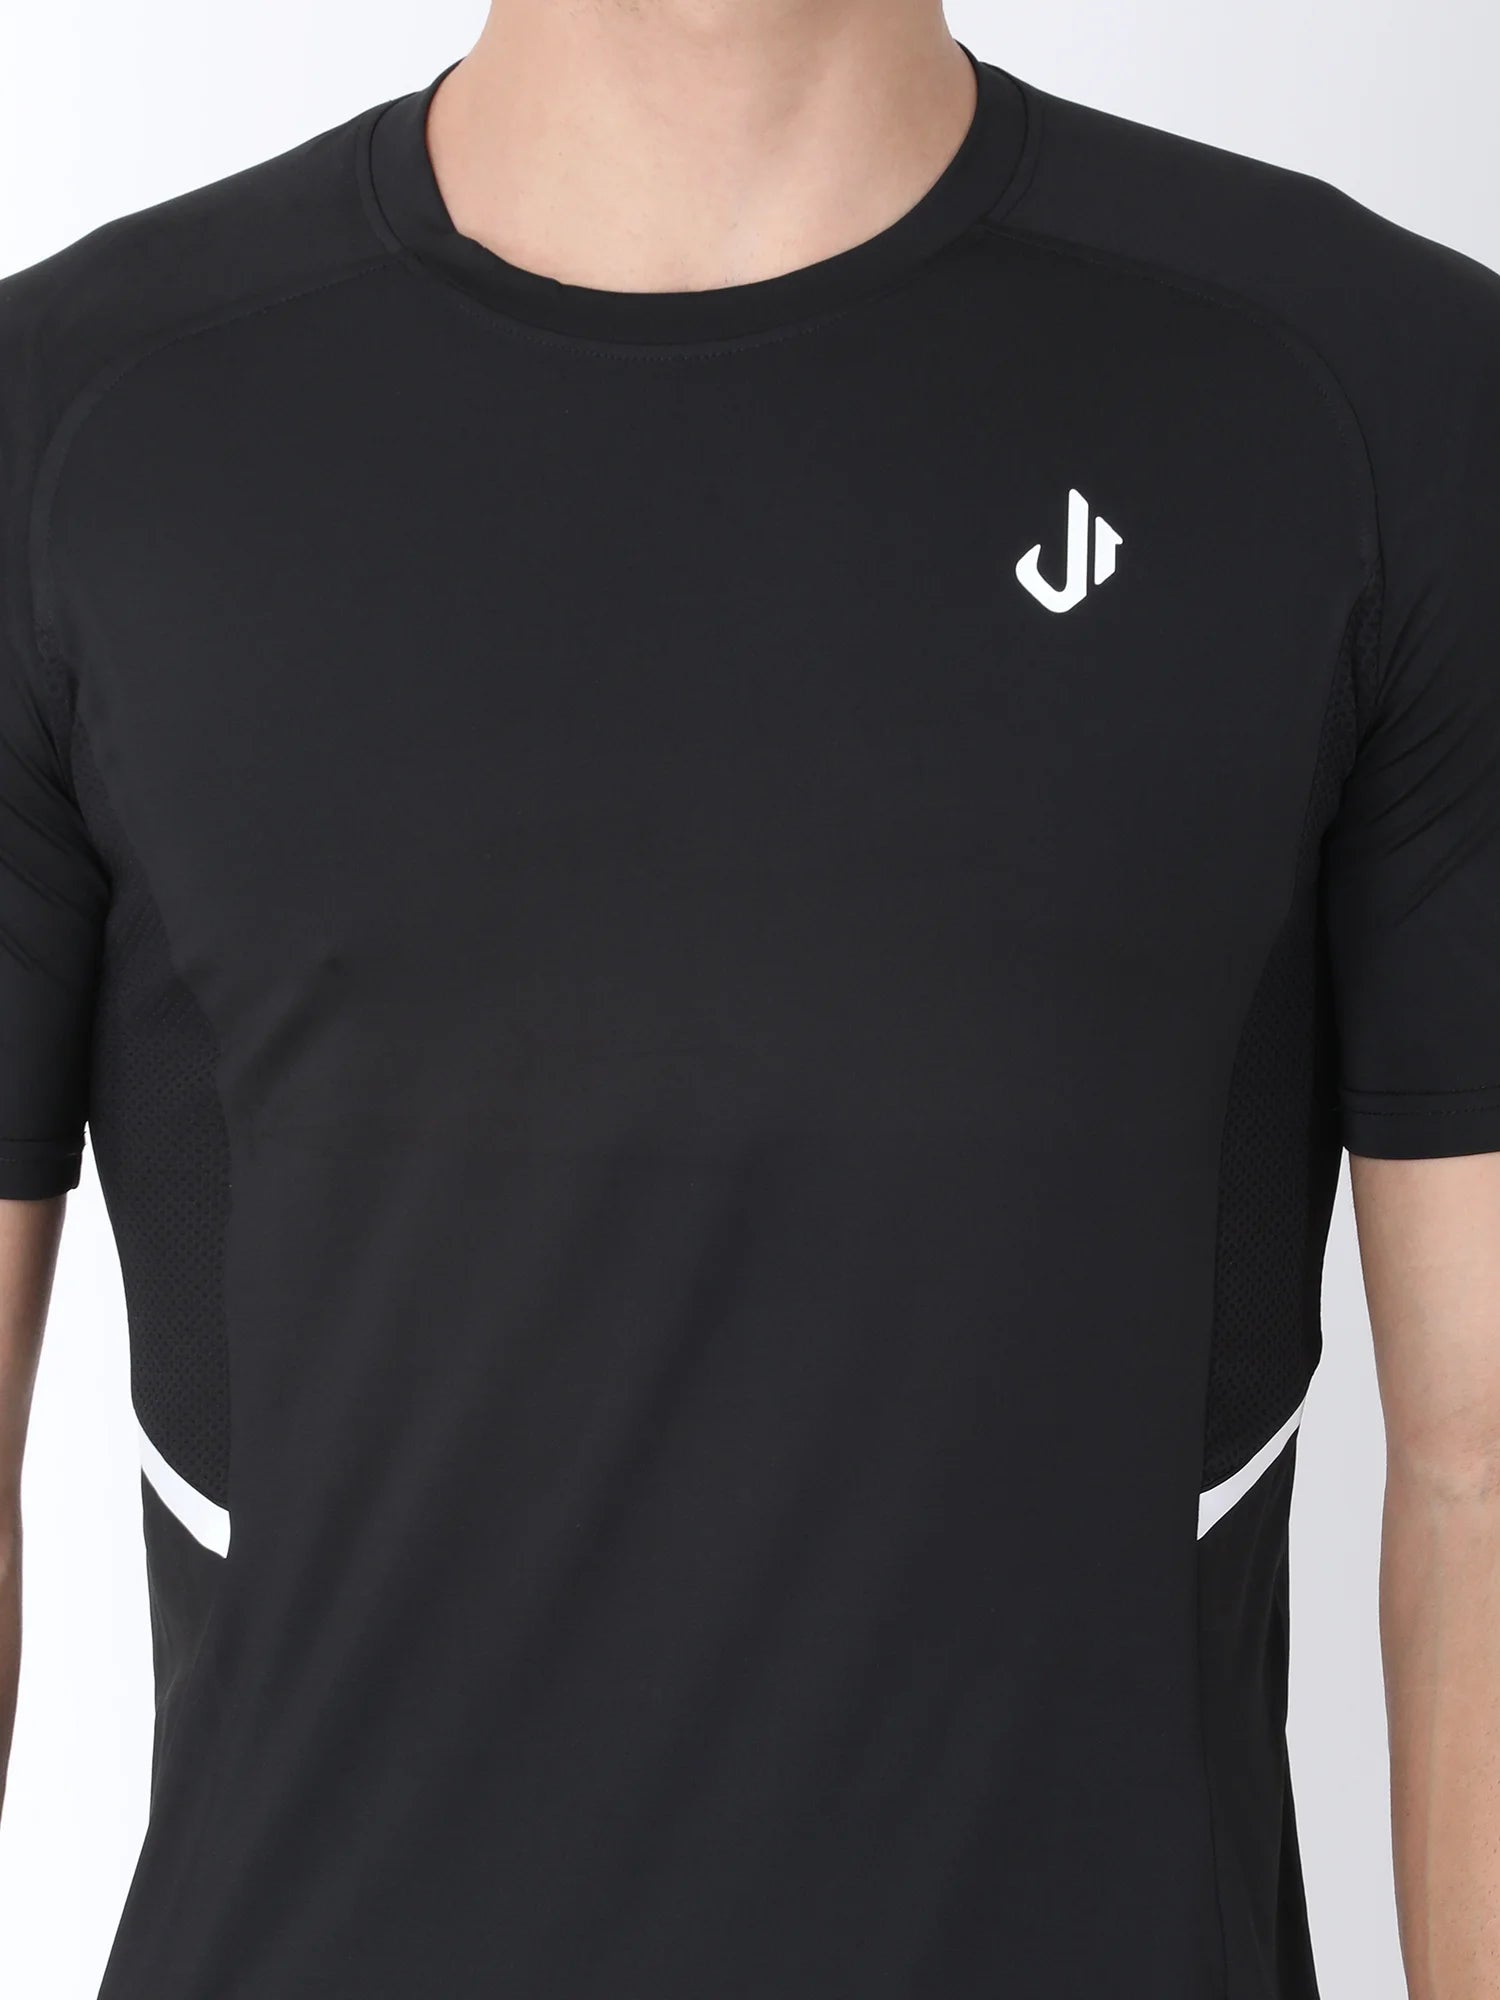 Jeffa Elite Training T-shirt in Black